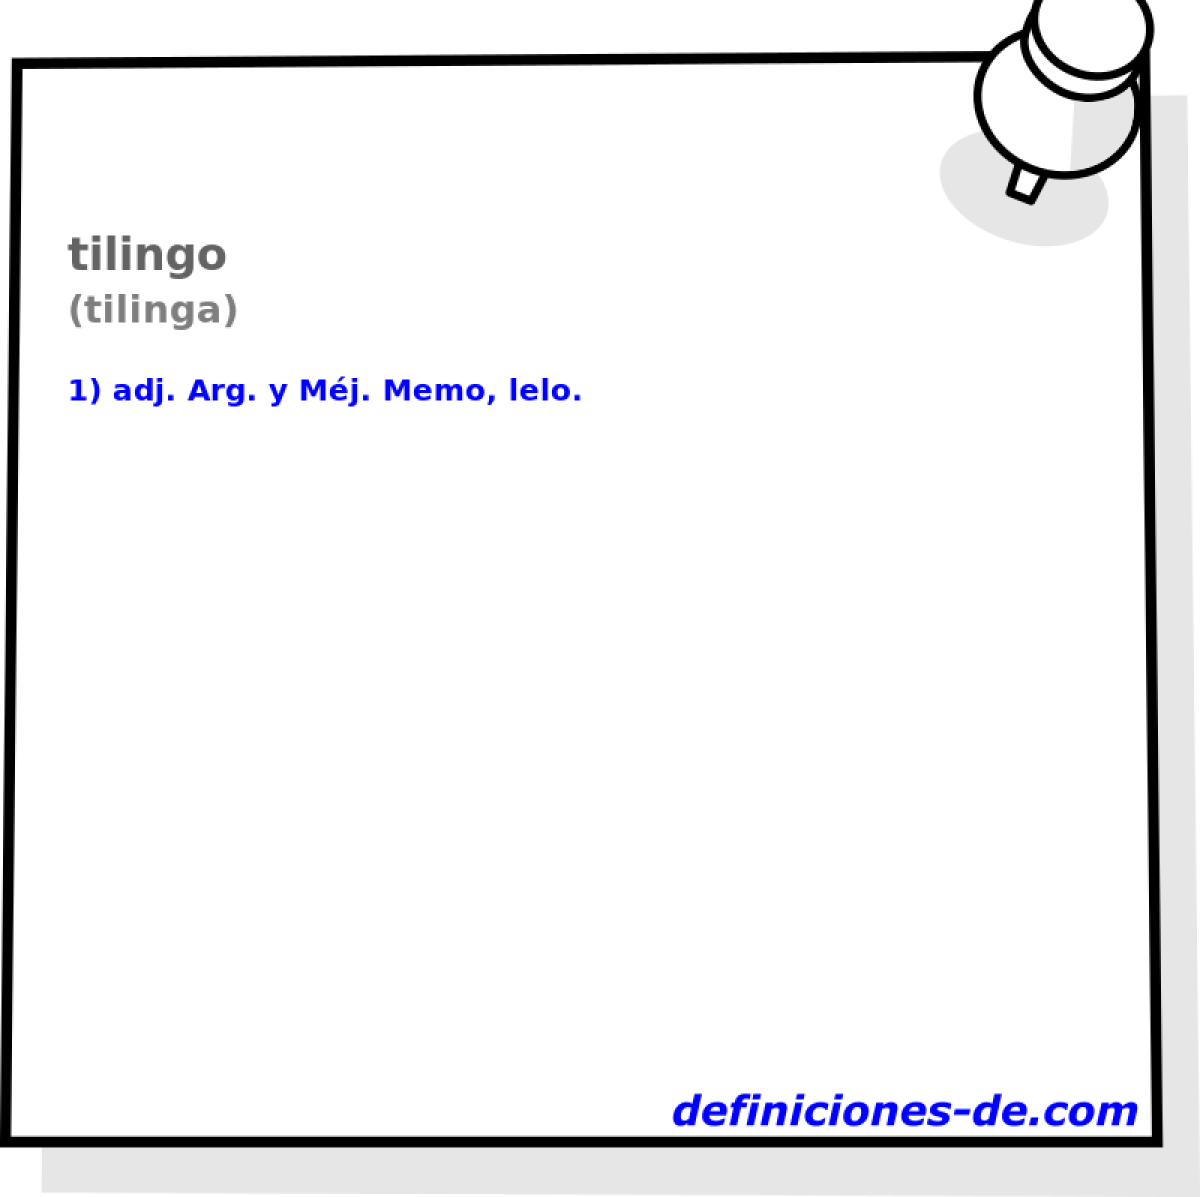 tilingo (tilinga)